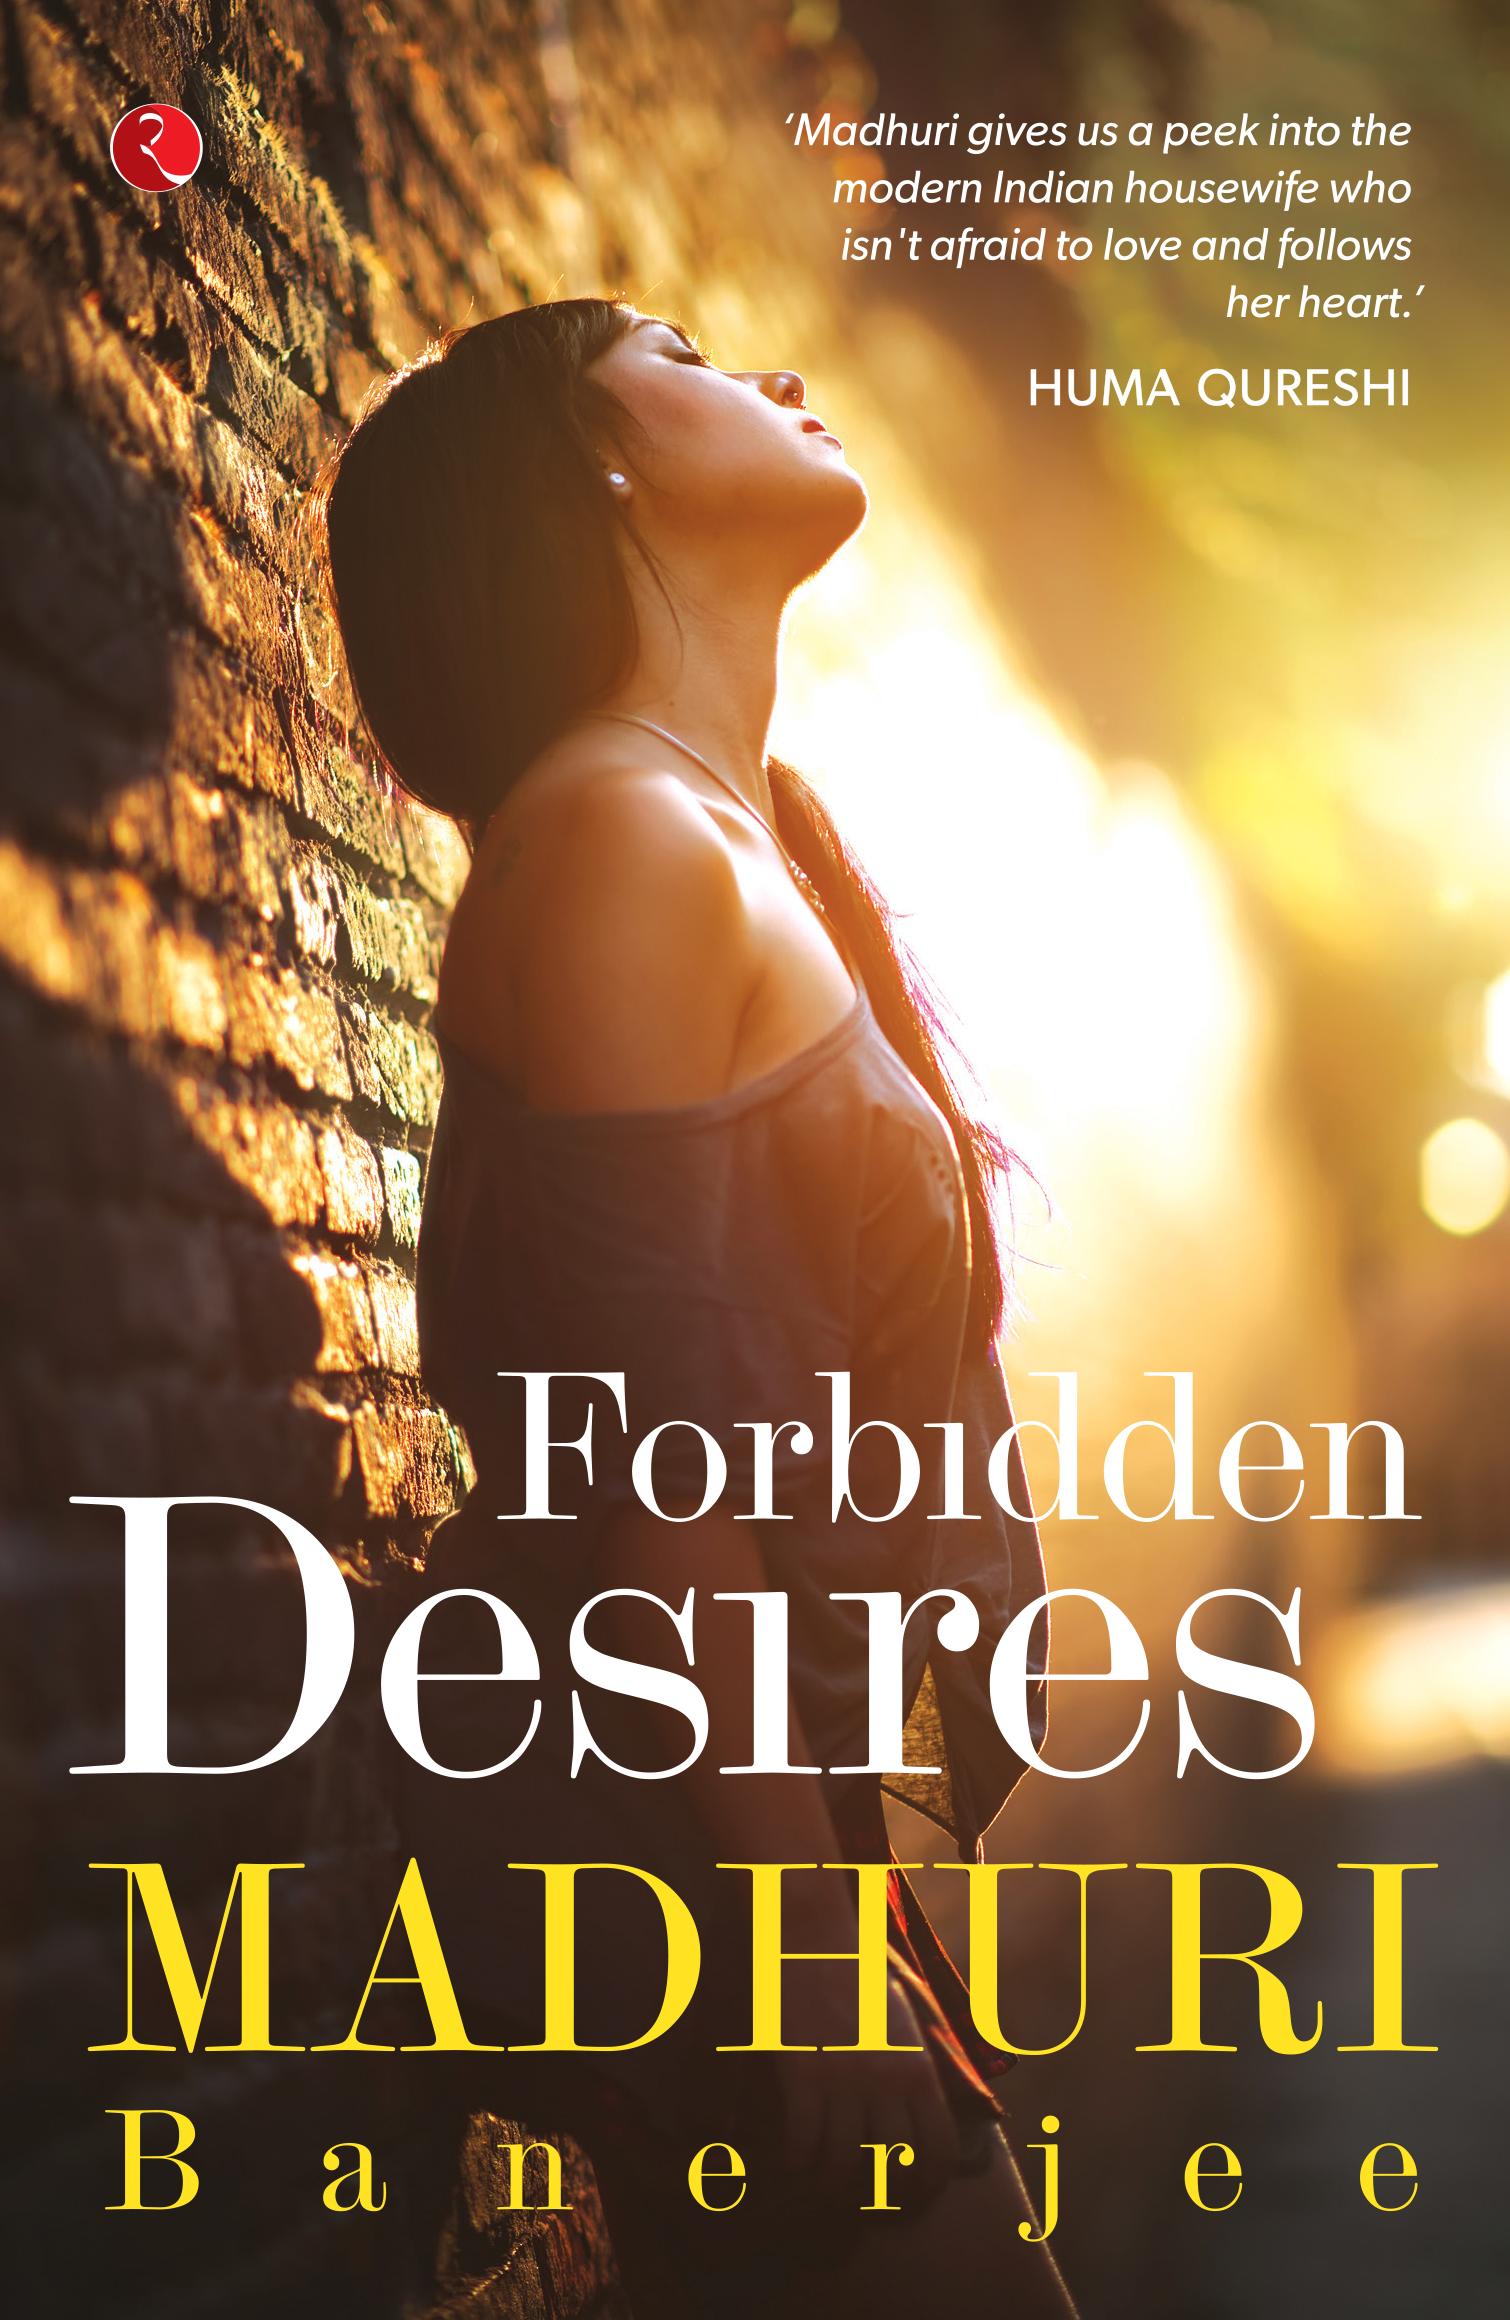 Forbidden Desires.